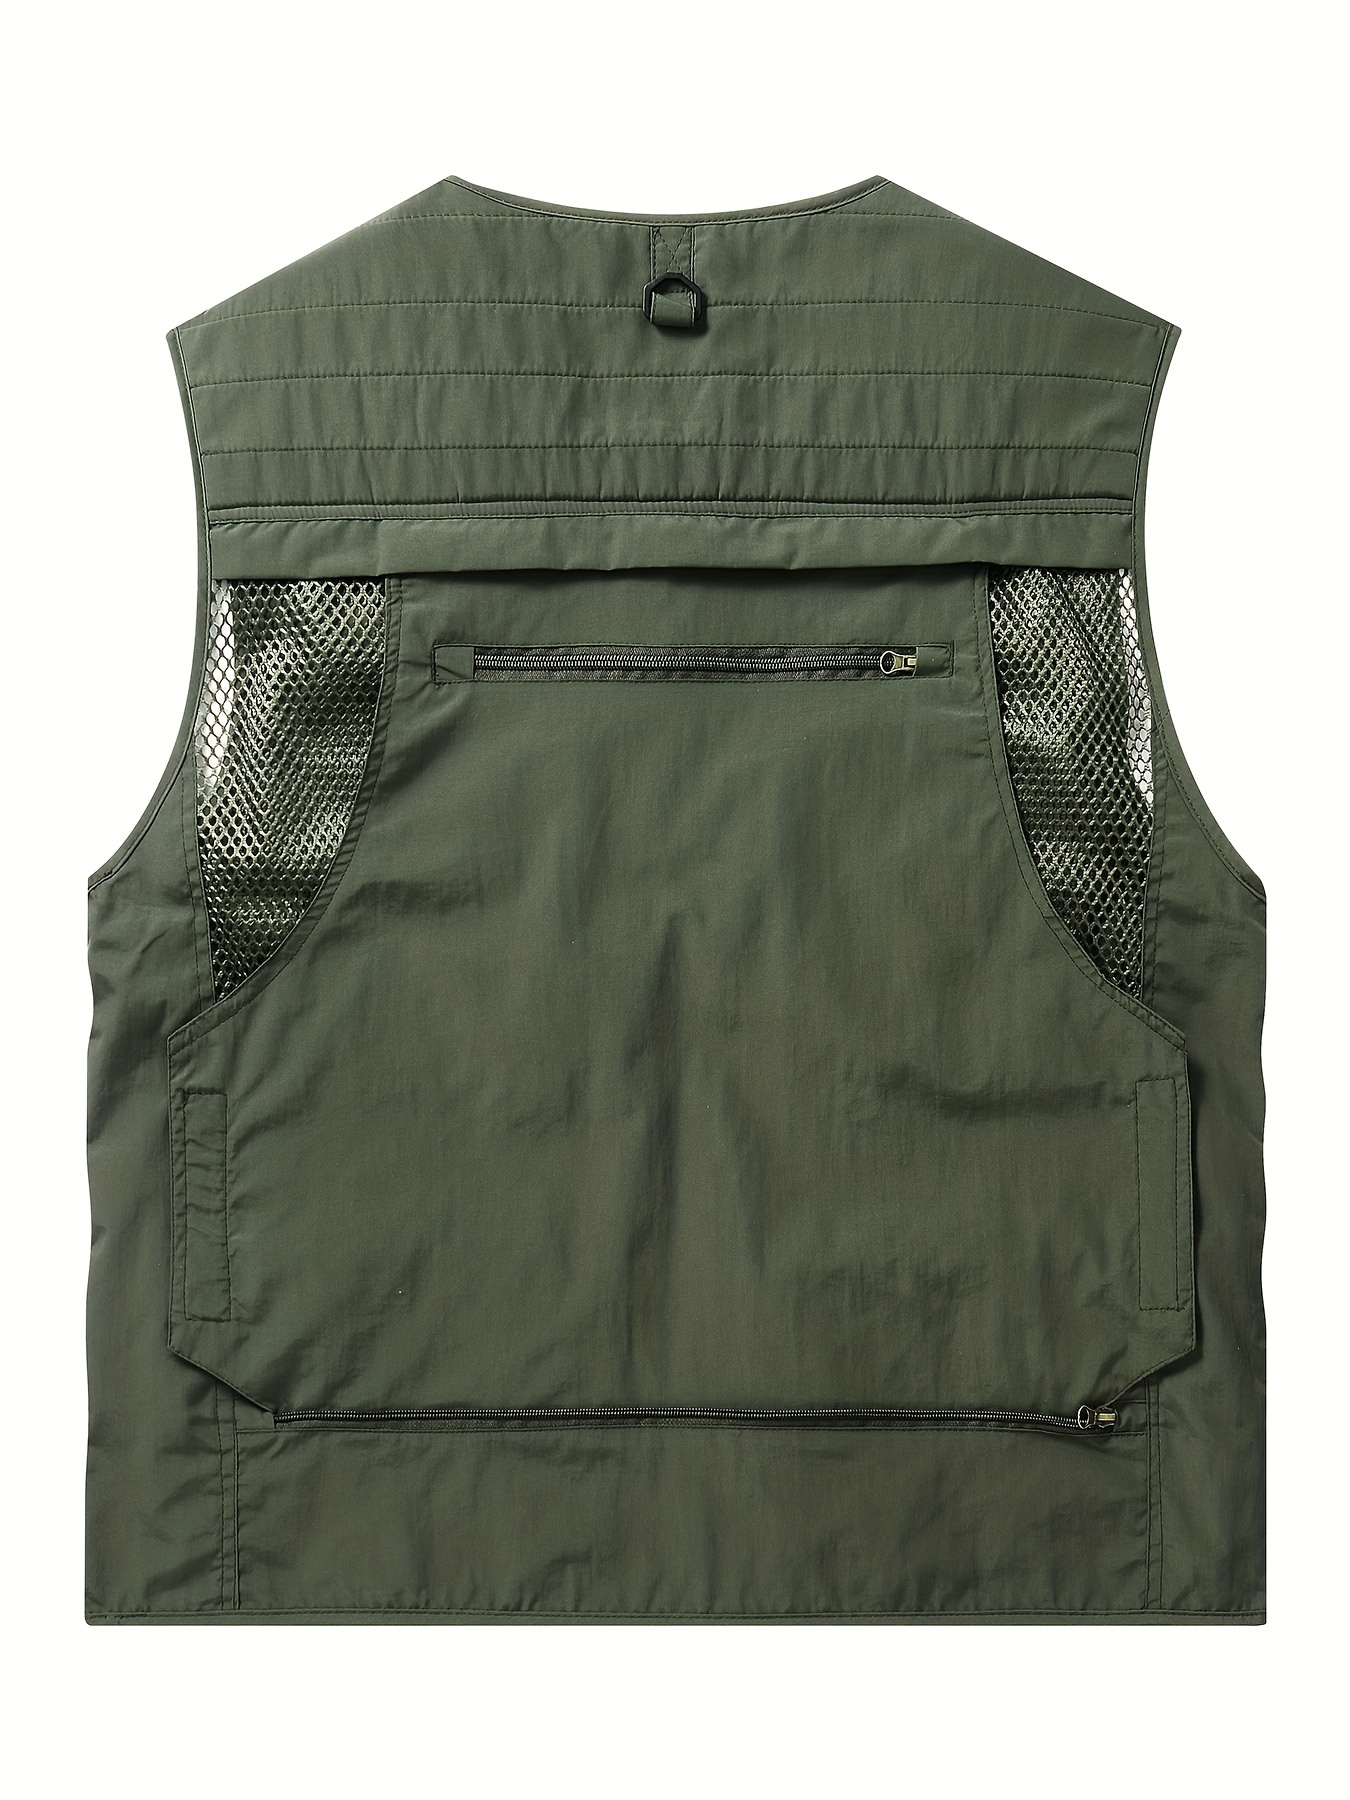 Generic Fishing Vest Multiple Pockets Breathable Grid Mesh